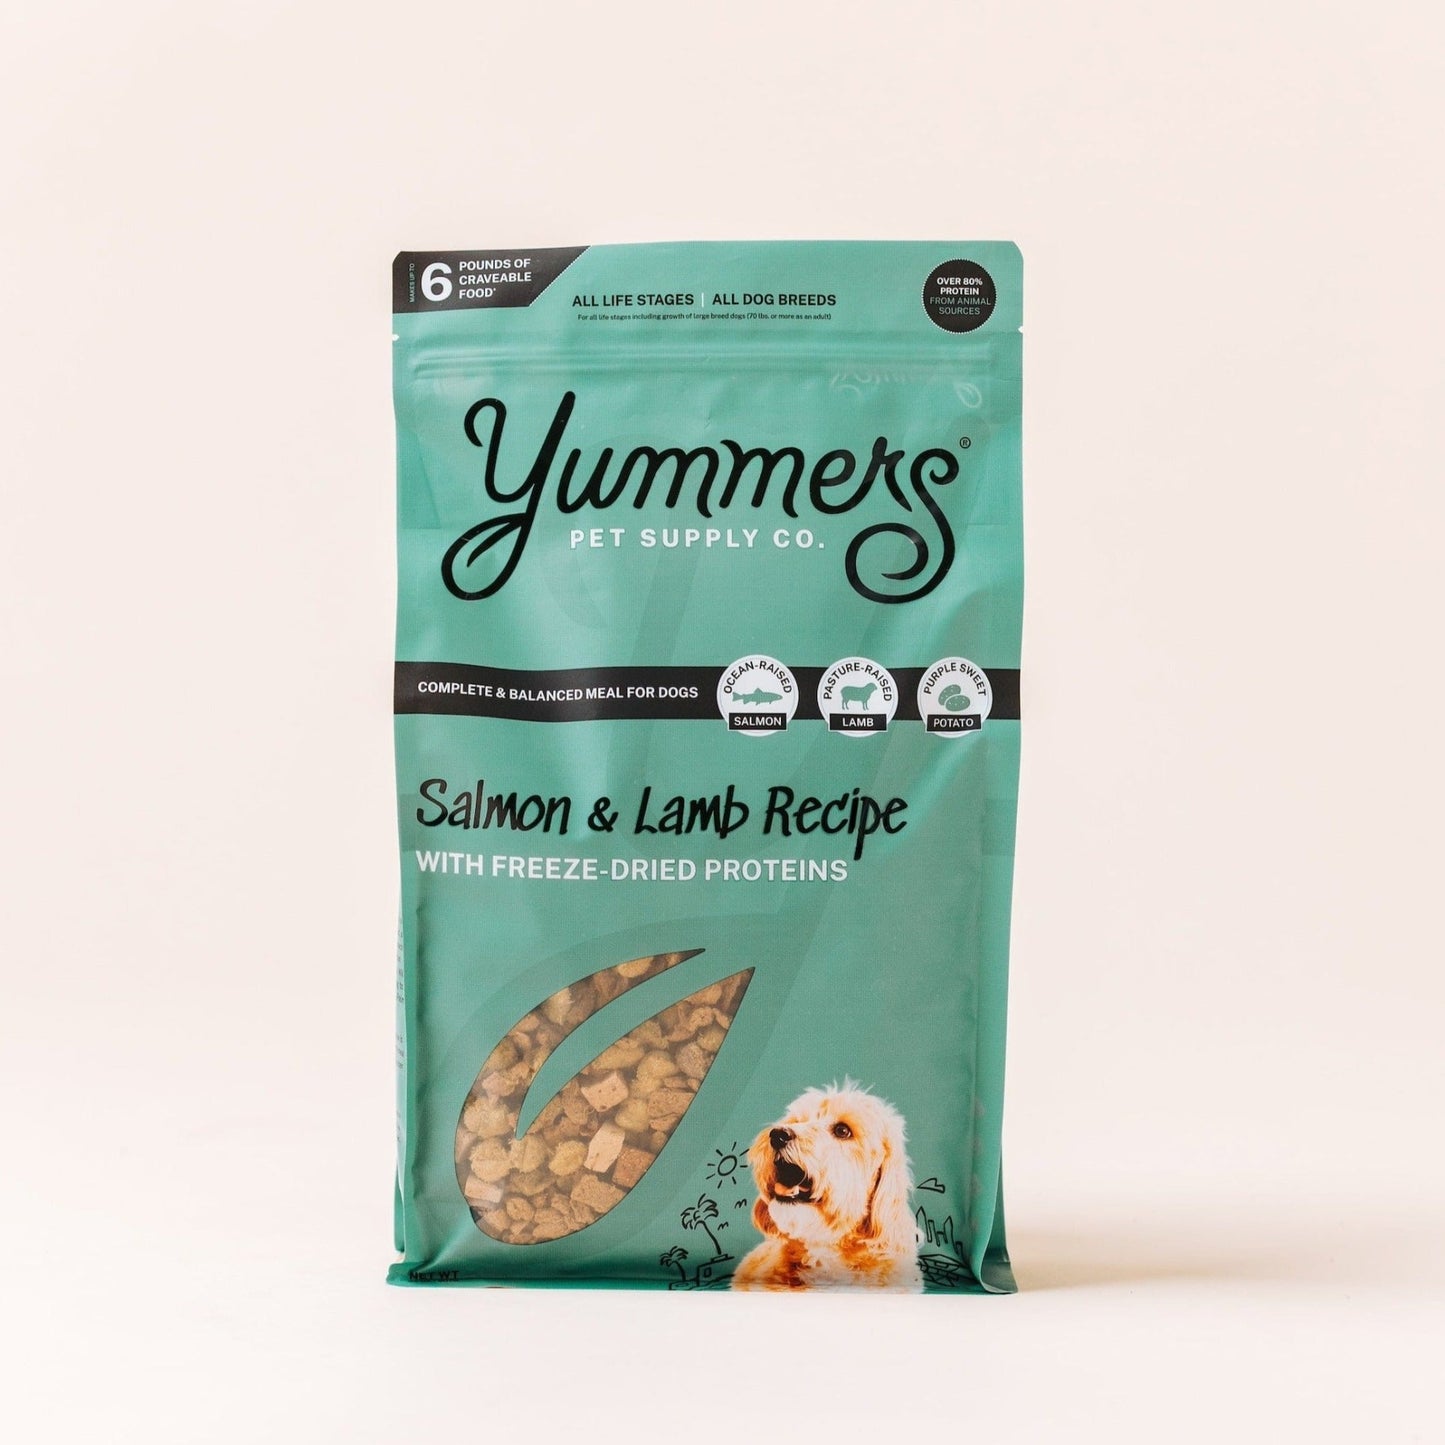 Yummers Salmon & Lamb Dog Food